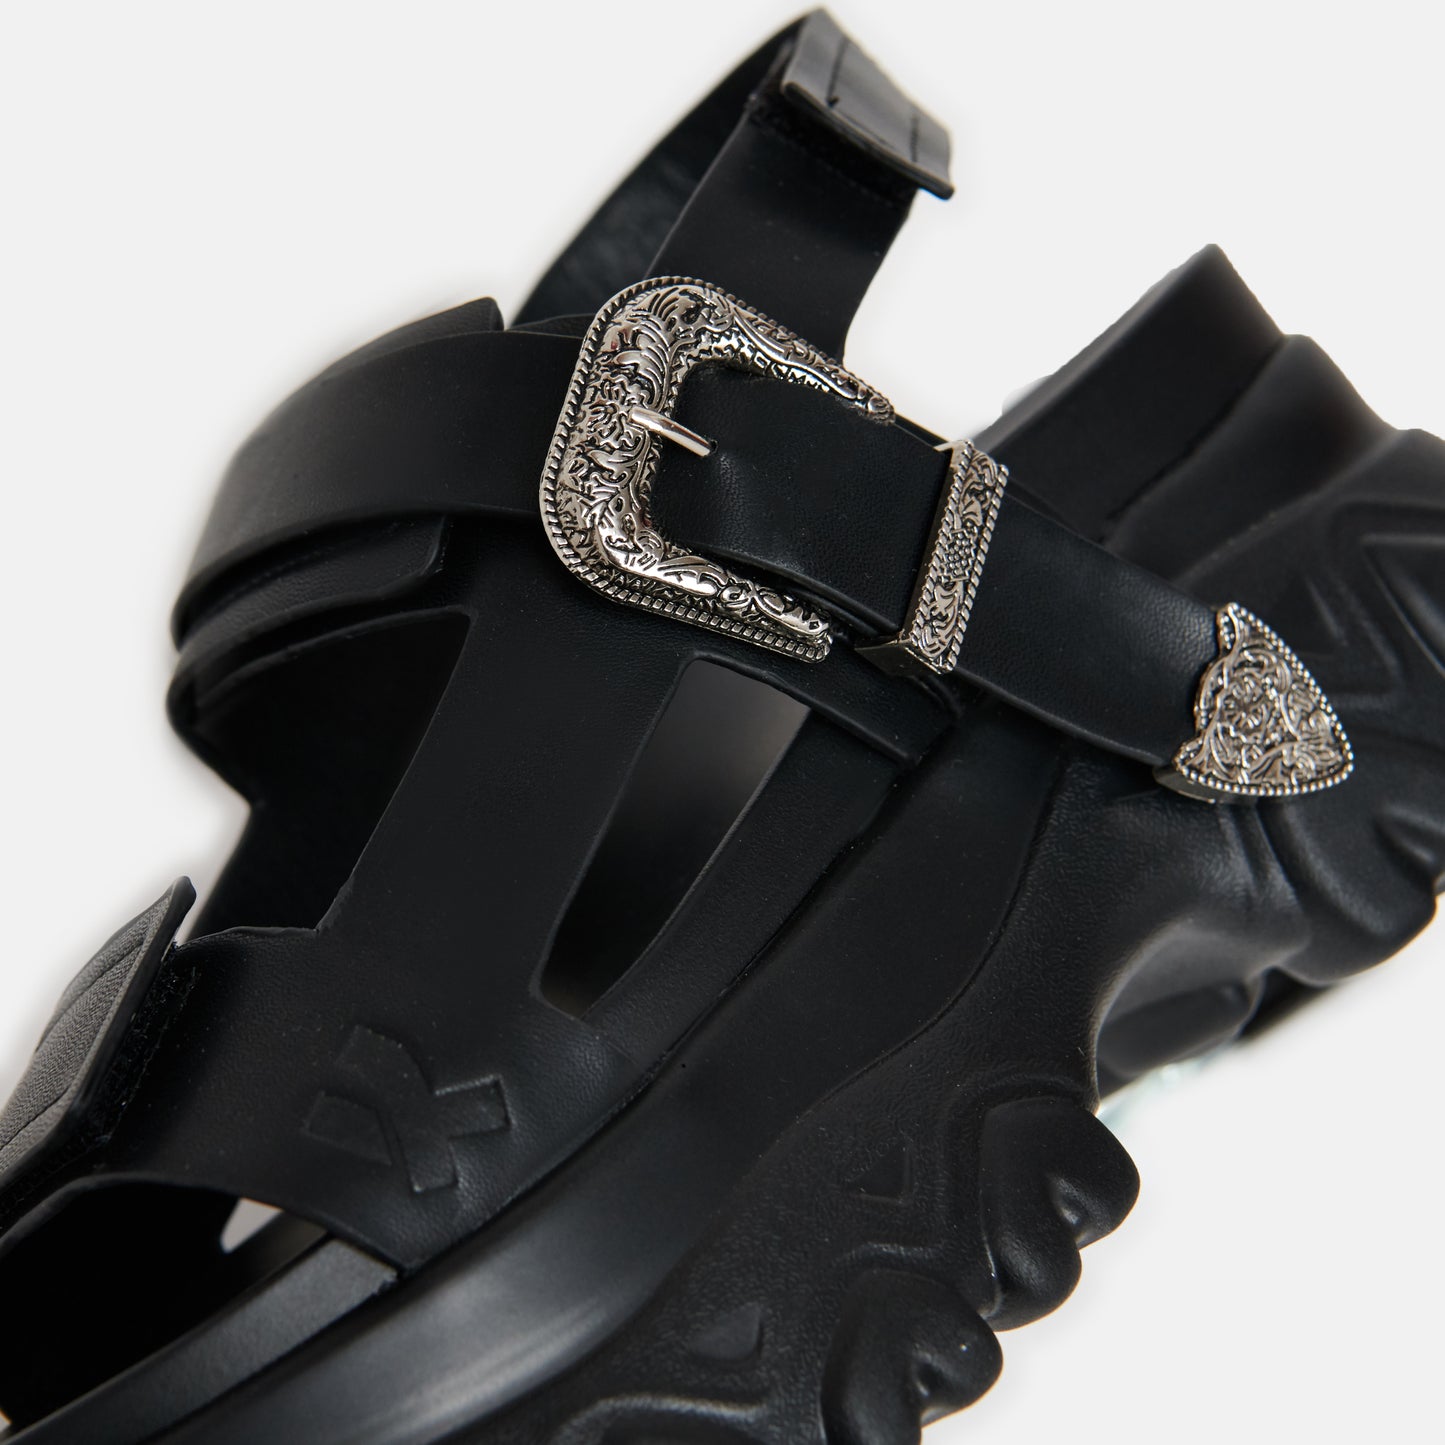 Iron Surveillance Chunky Sandals - Sandals - KOI Footwear - Black - Side Detail View